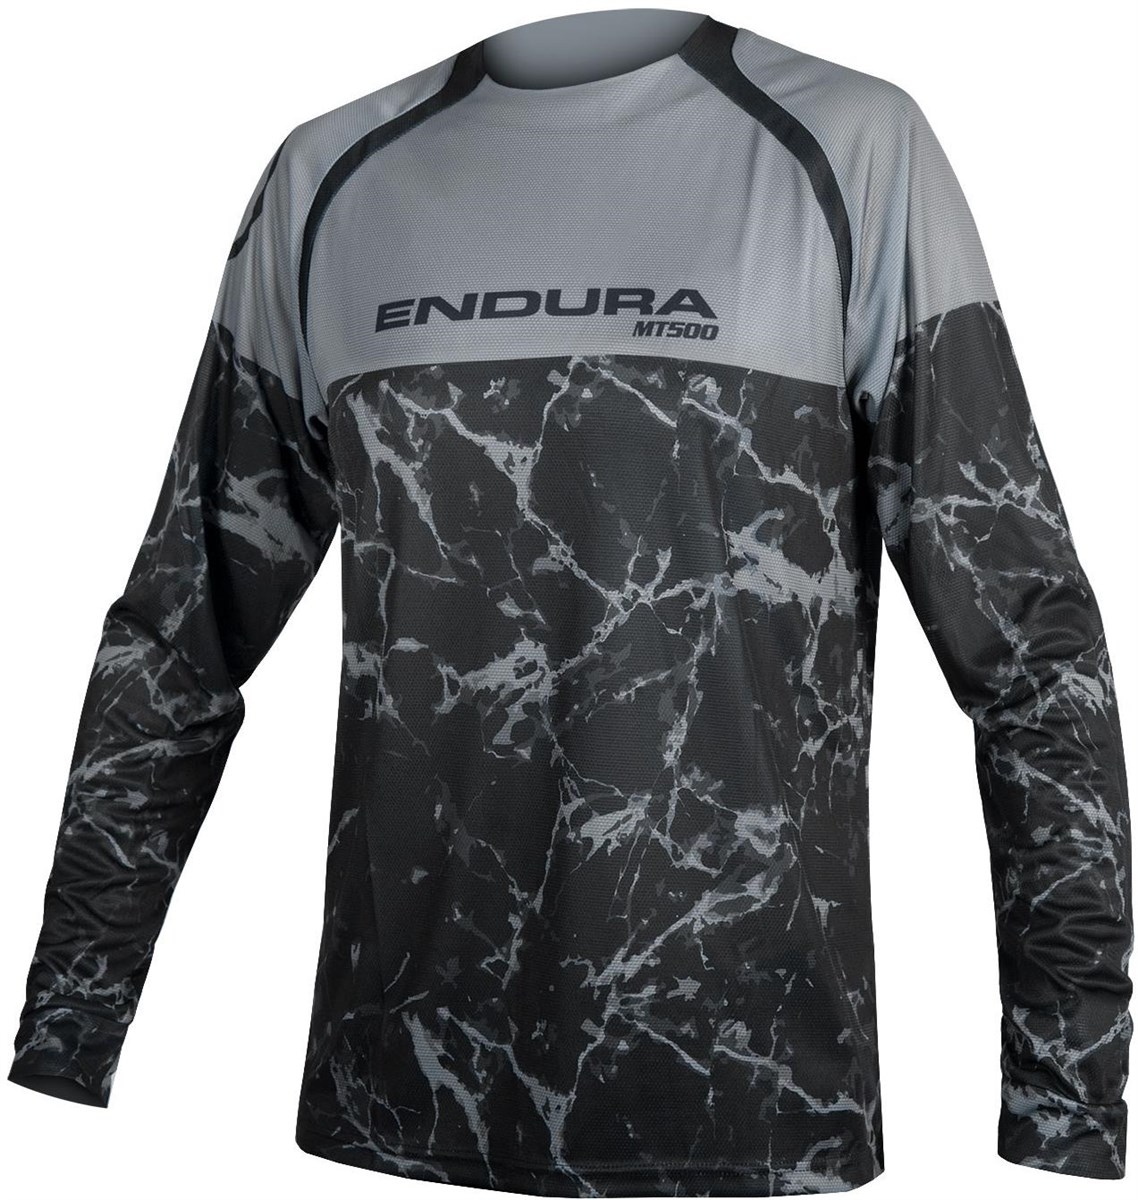 Endura MT500 Marble LTD Long Sleeve Jersey product image